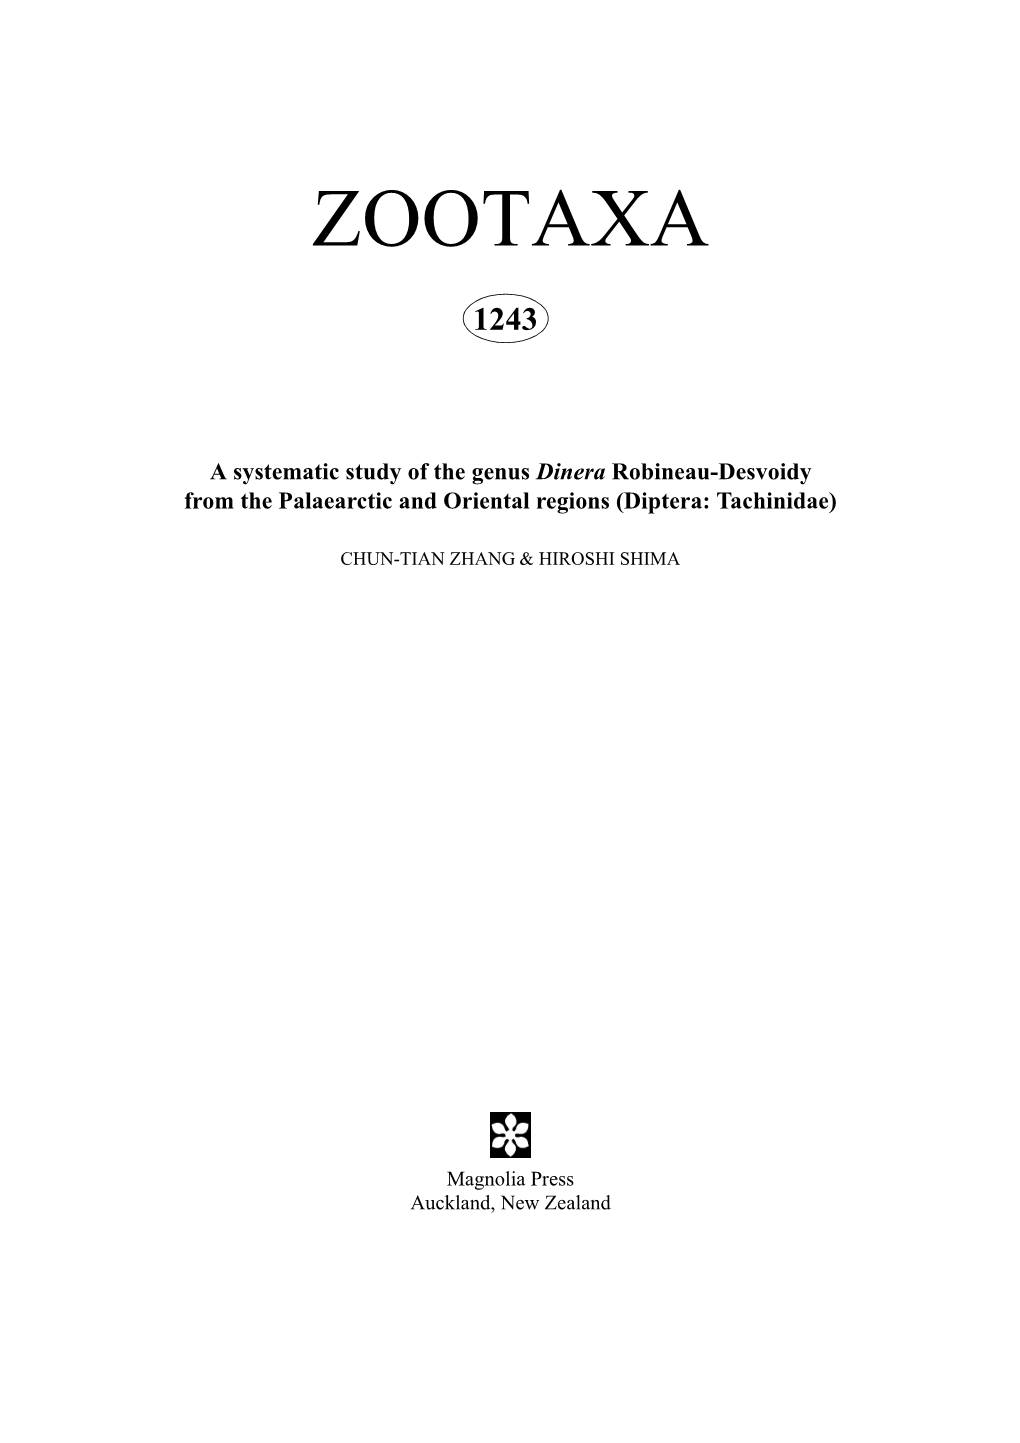 Zootaxa, Dinera (Diptera: Tachinidae)